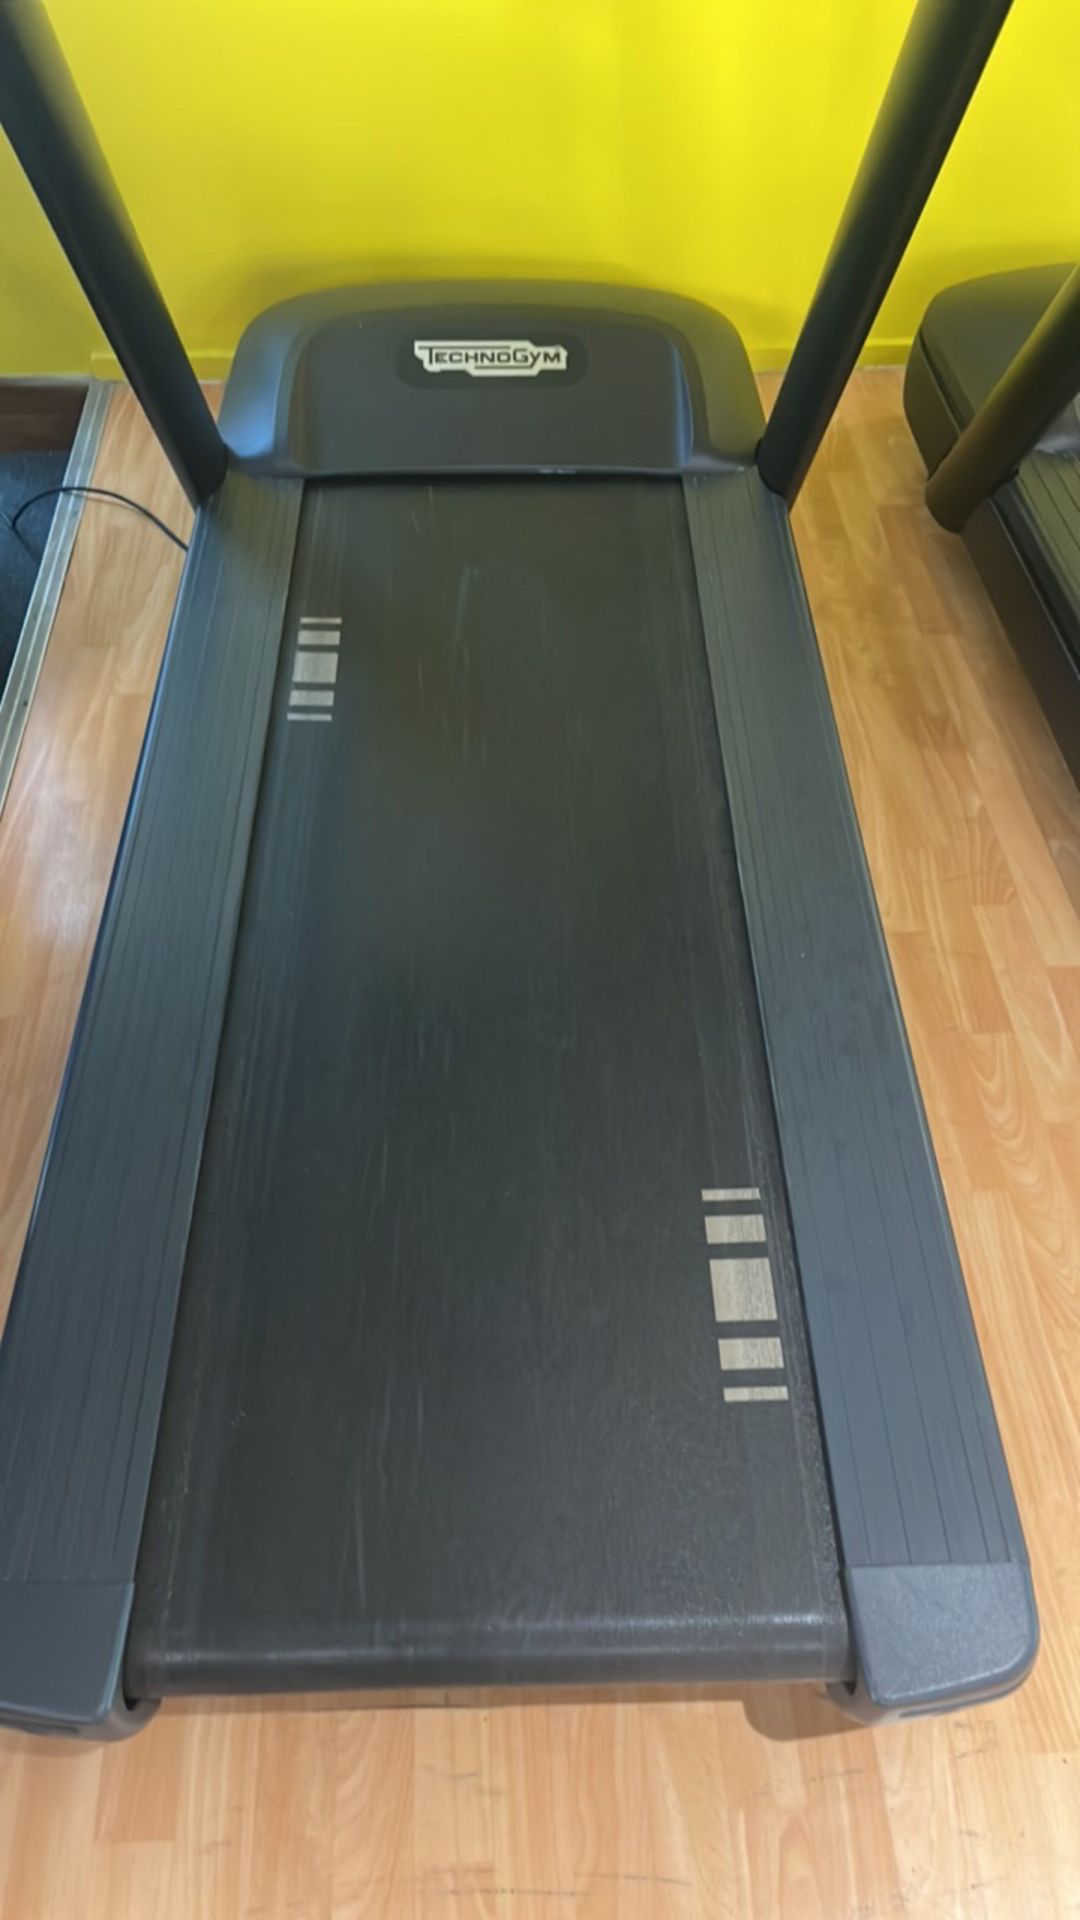 Technogym Treadmill 600 - Image 2 of 5